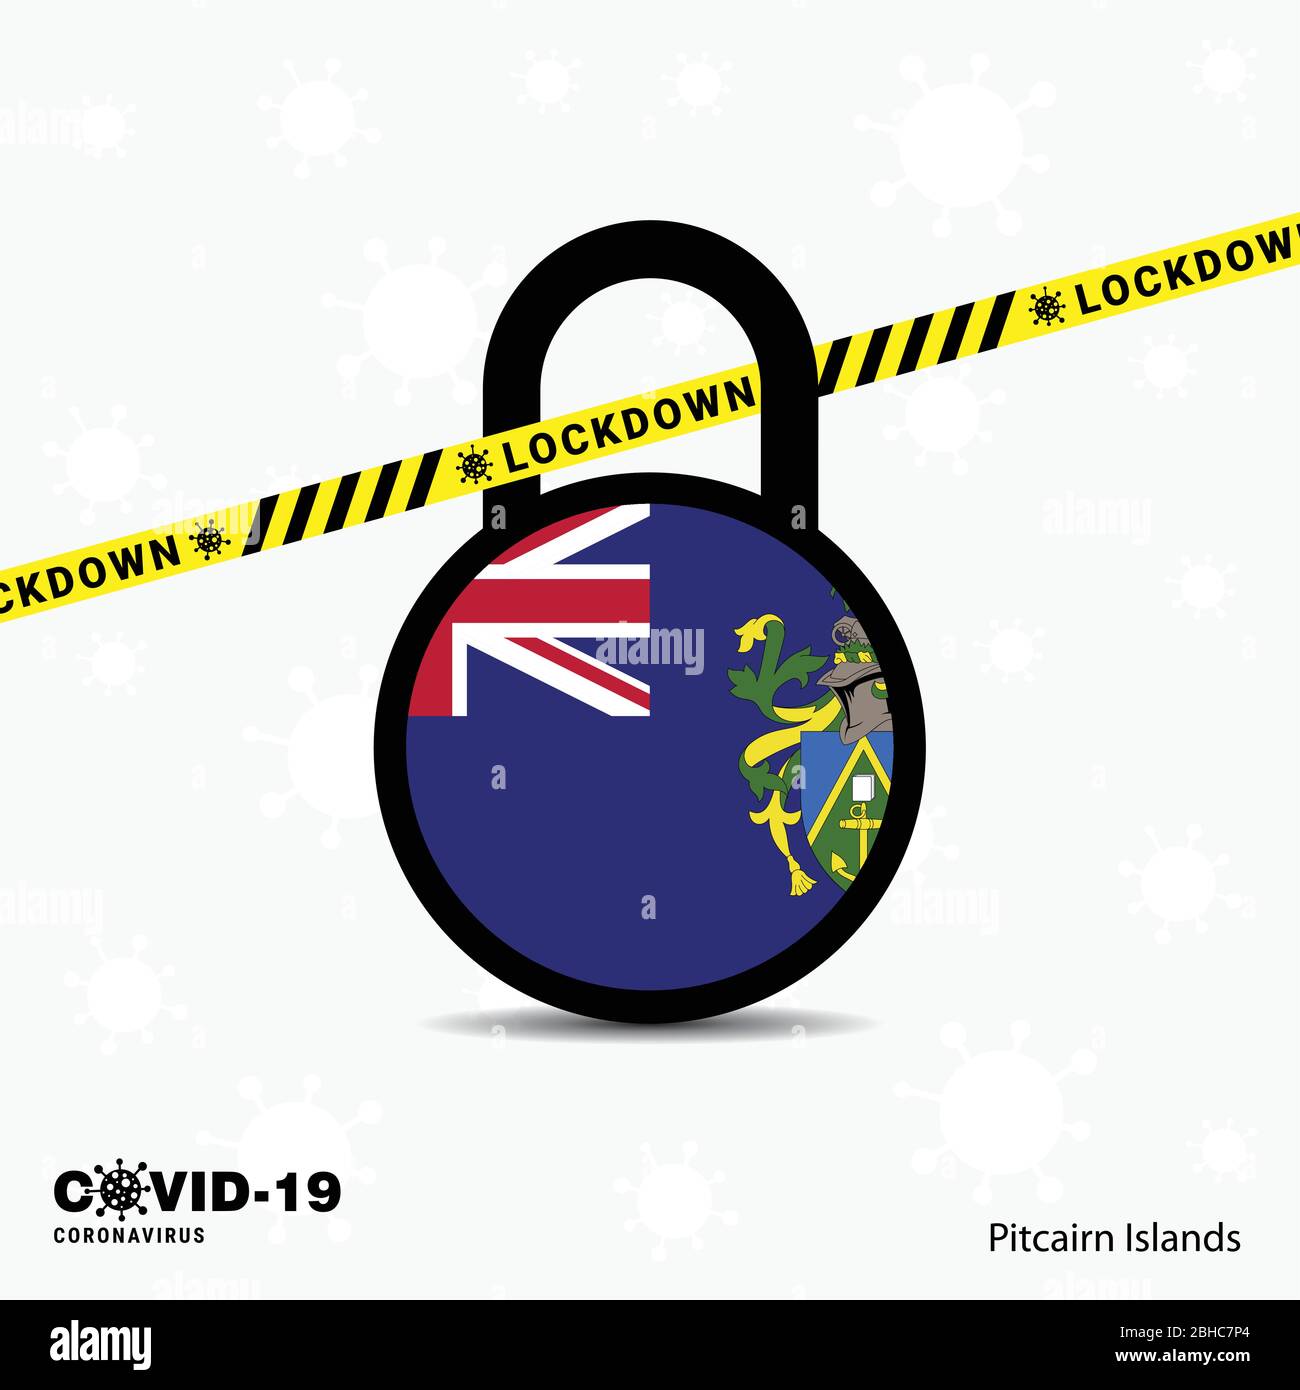 Pitcairn Islnand Lock DOwn Lock Coronavirus pandemic awareness Template. COVID-19 Lock Down Design Stock Vector